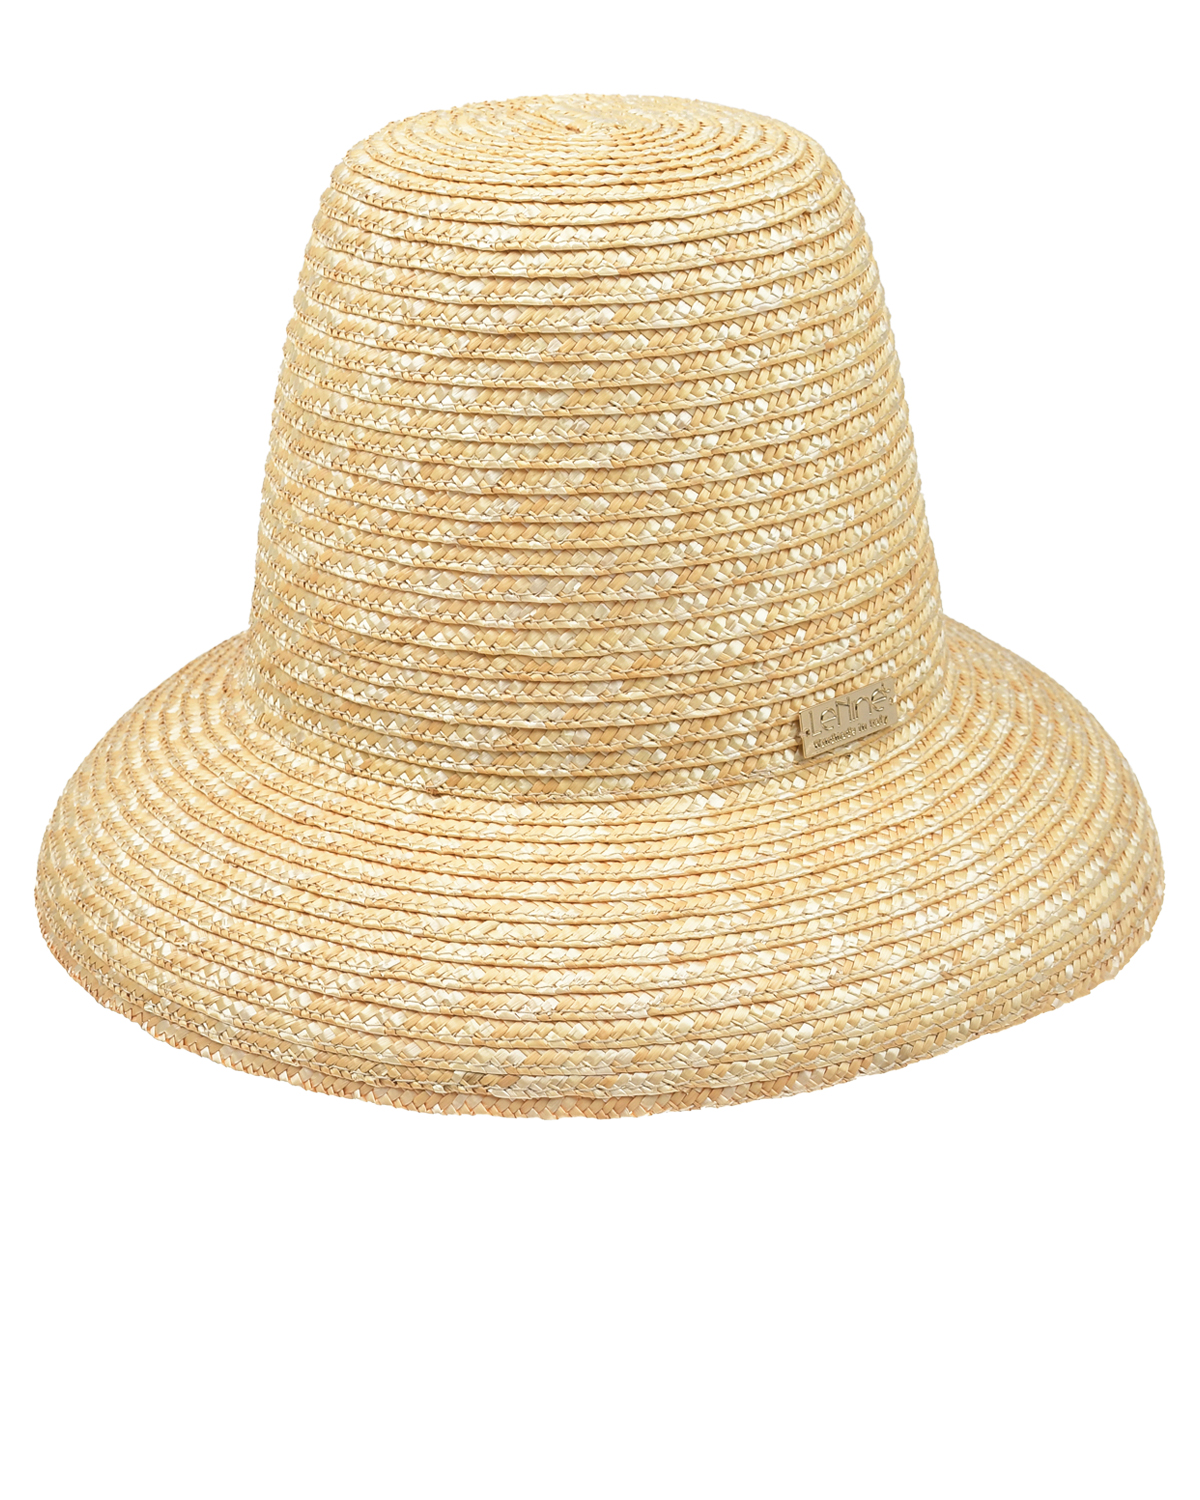 Плетеная шляпа с закругленными полями Le Nine, размер unica, цвет бежевый